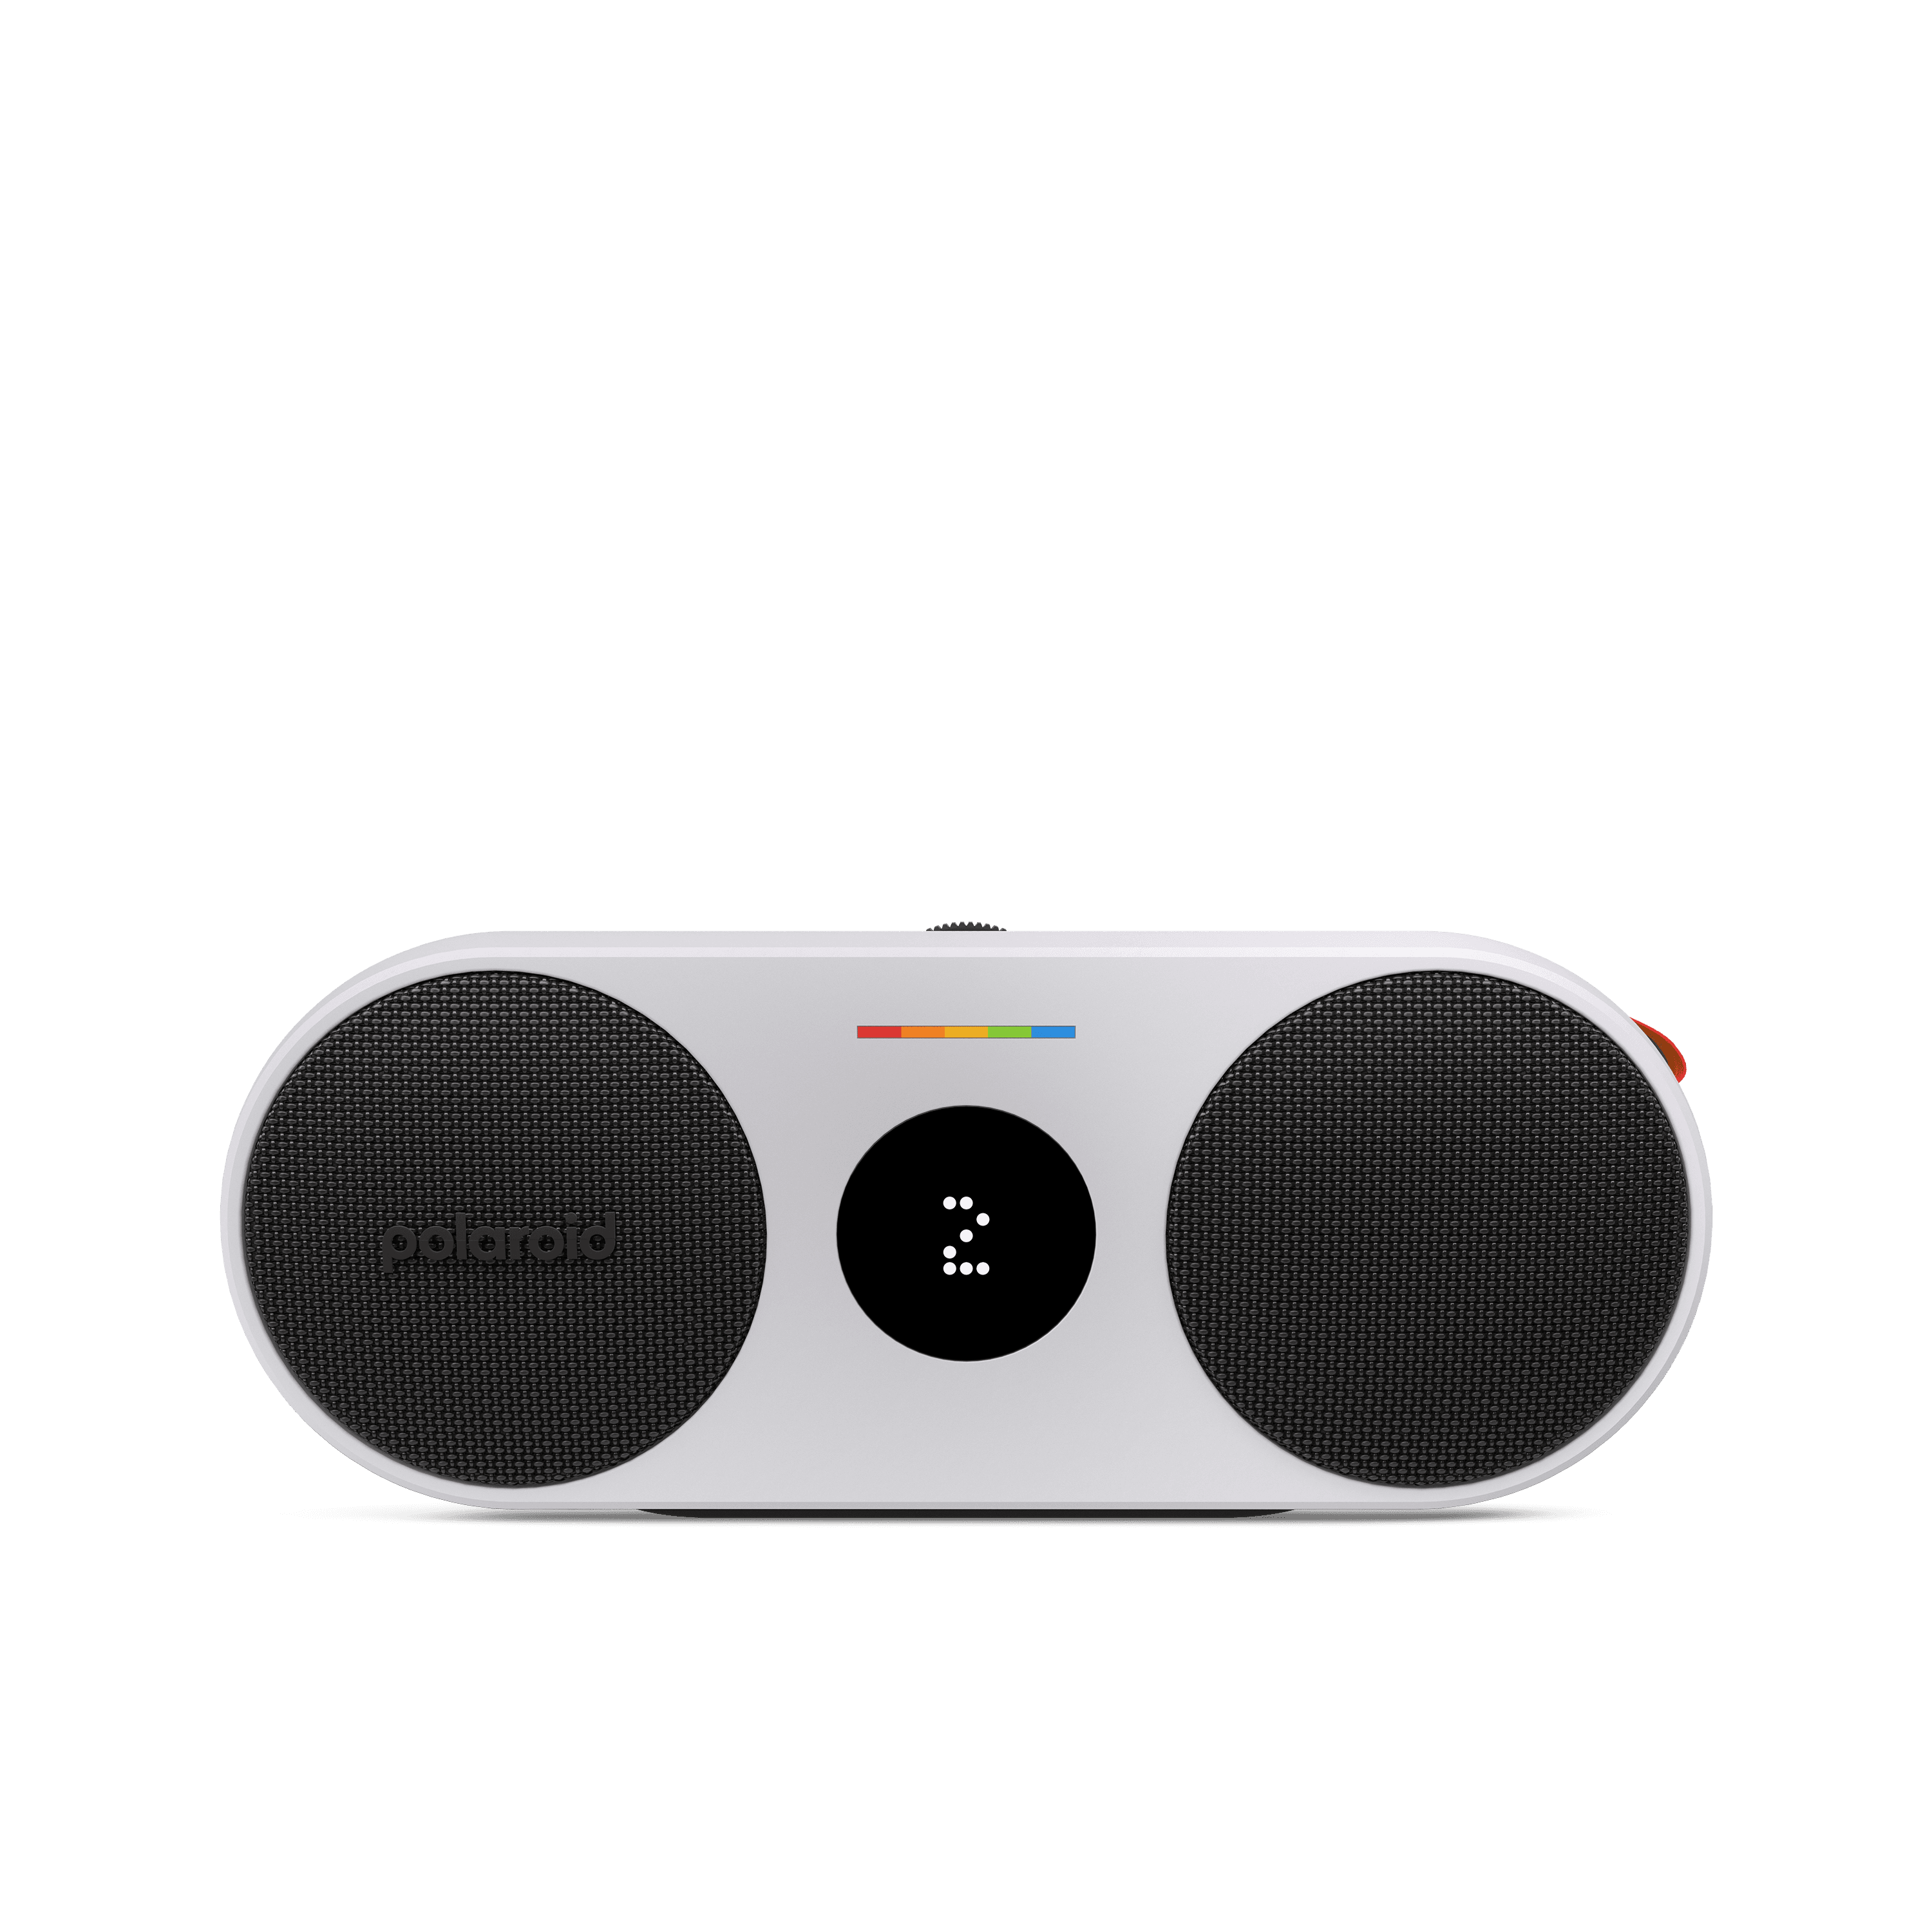 POLAROID P2 Music Player Bluetooth Wireless Portable Speaker - Black & White